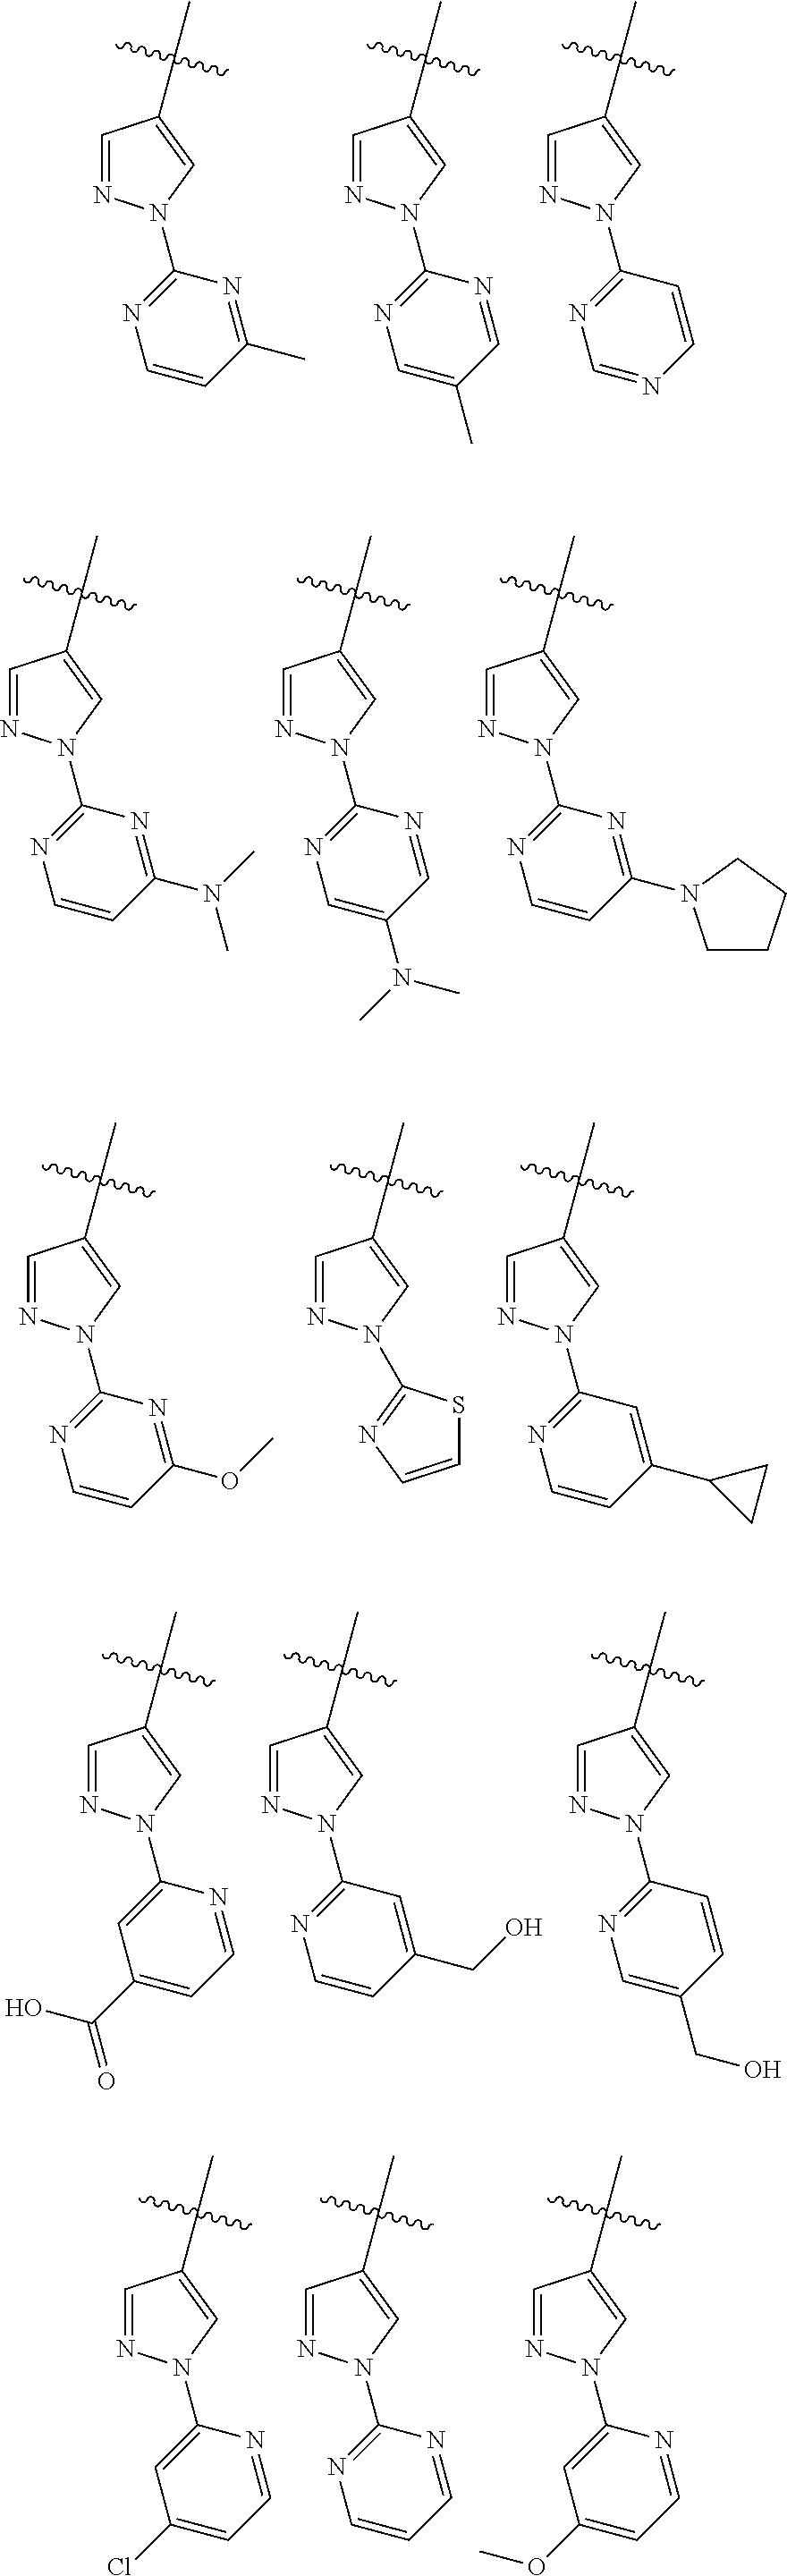 Pyrazolo[1,5-A]pyrimidin-7(4H)-onehistone demethylase inhibitors